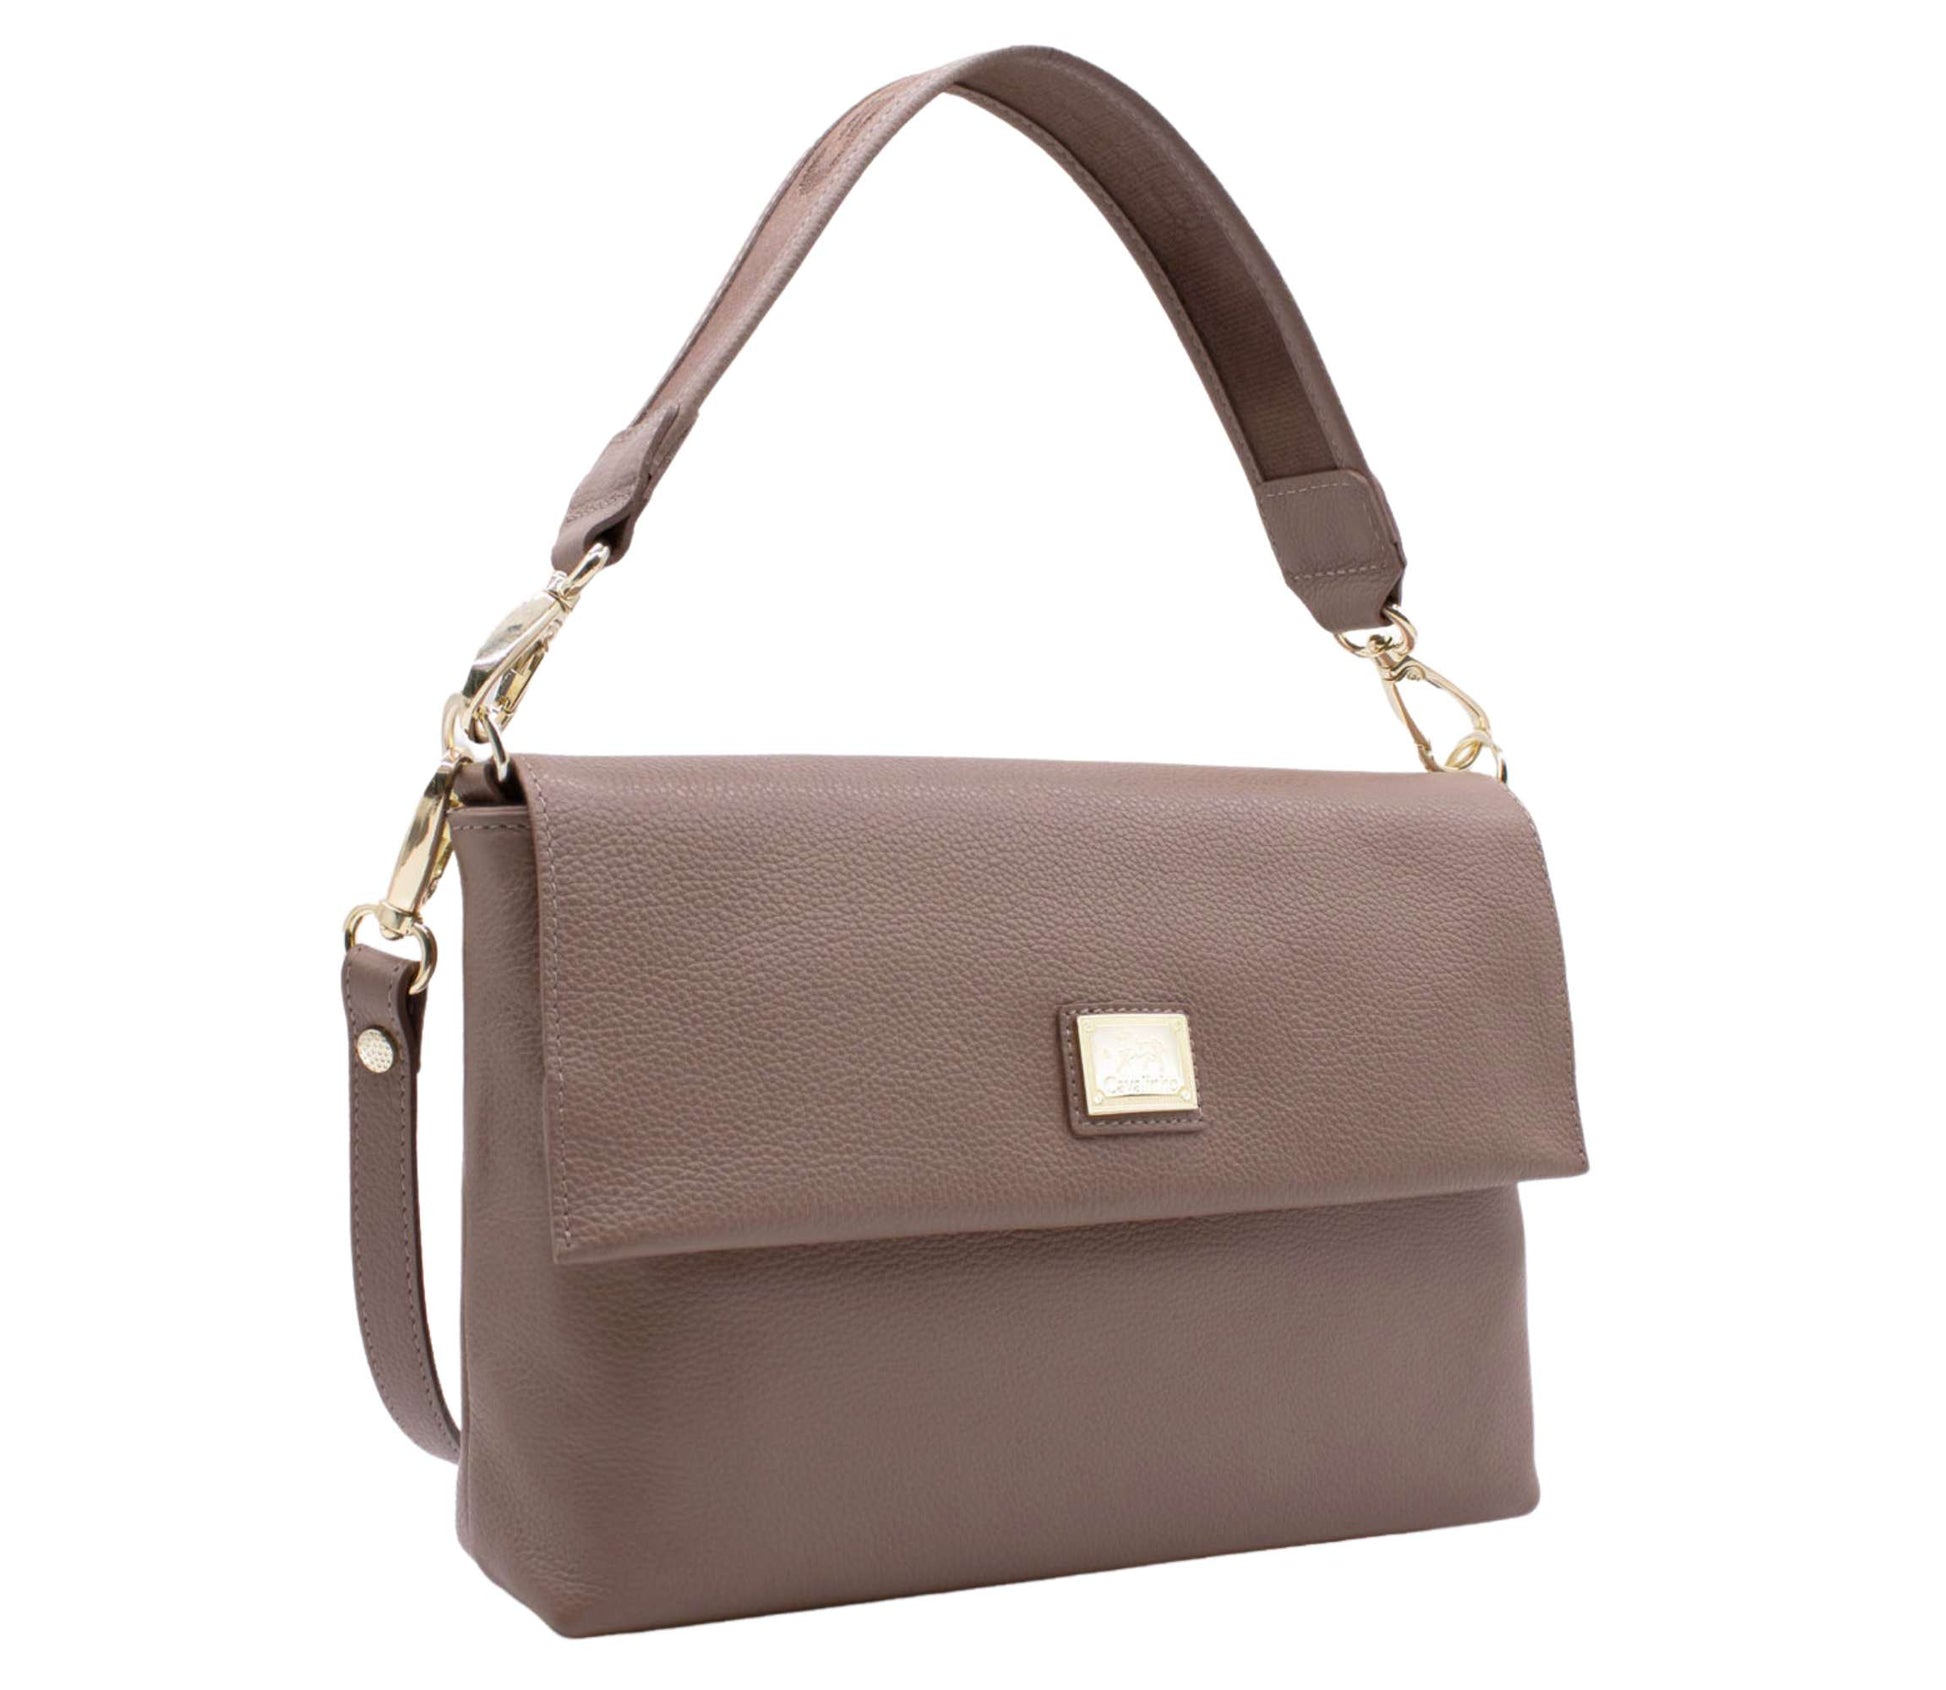 #color_ Sand | Cavalinho Muse 3 in 1: Leather Clutch, Handbag or Crossbody Bag - Sand - 18300509.07.99_2